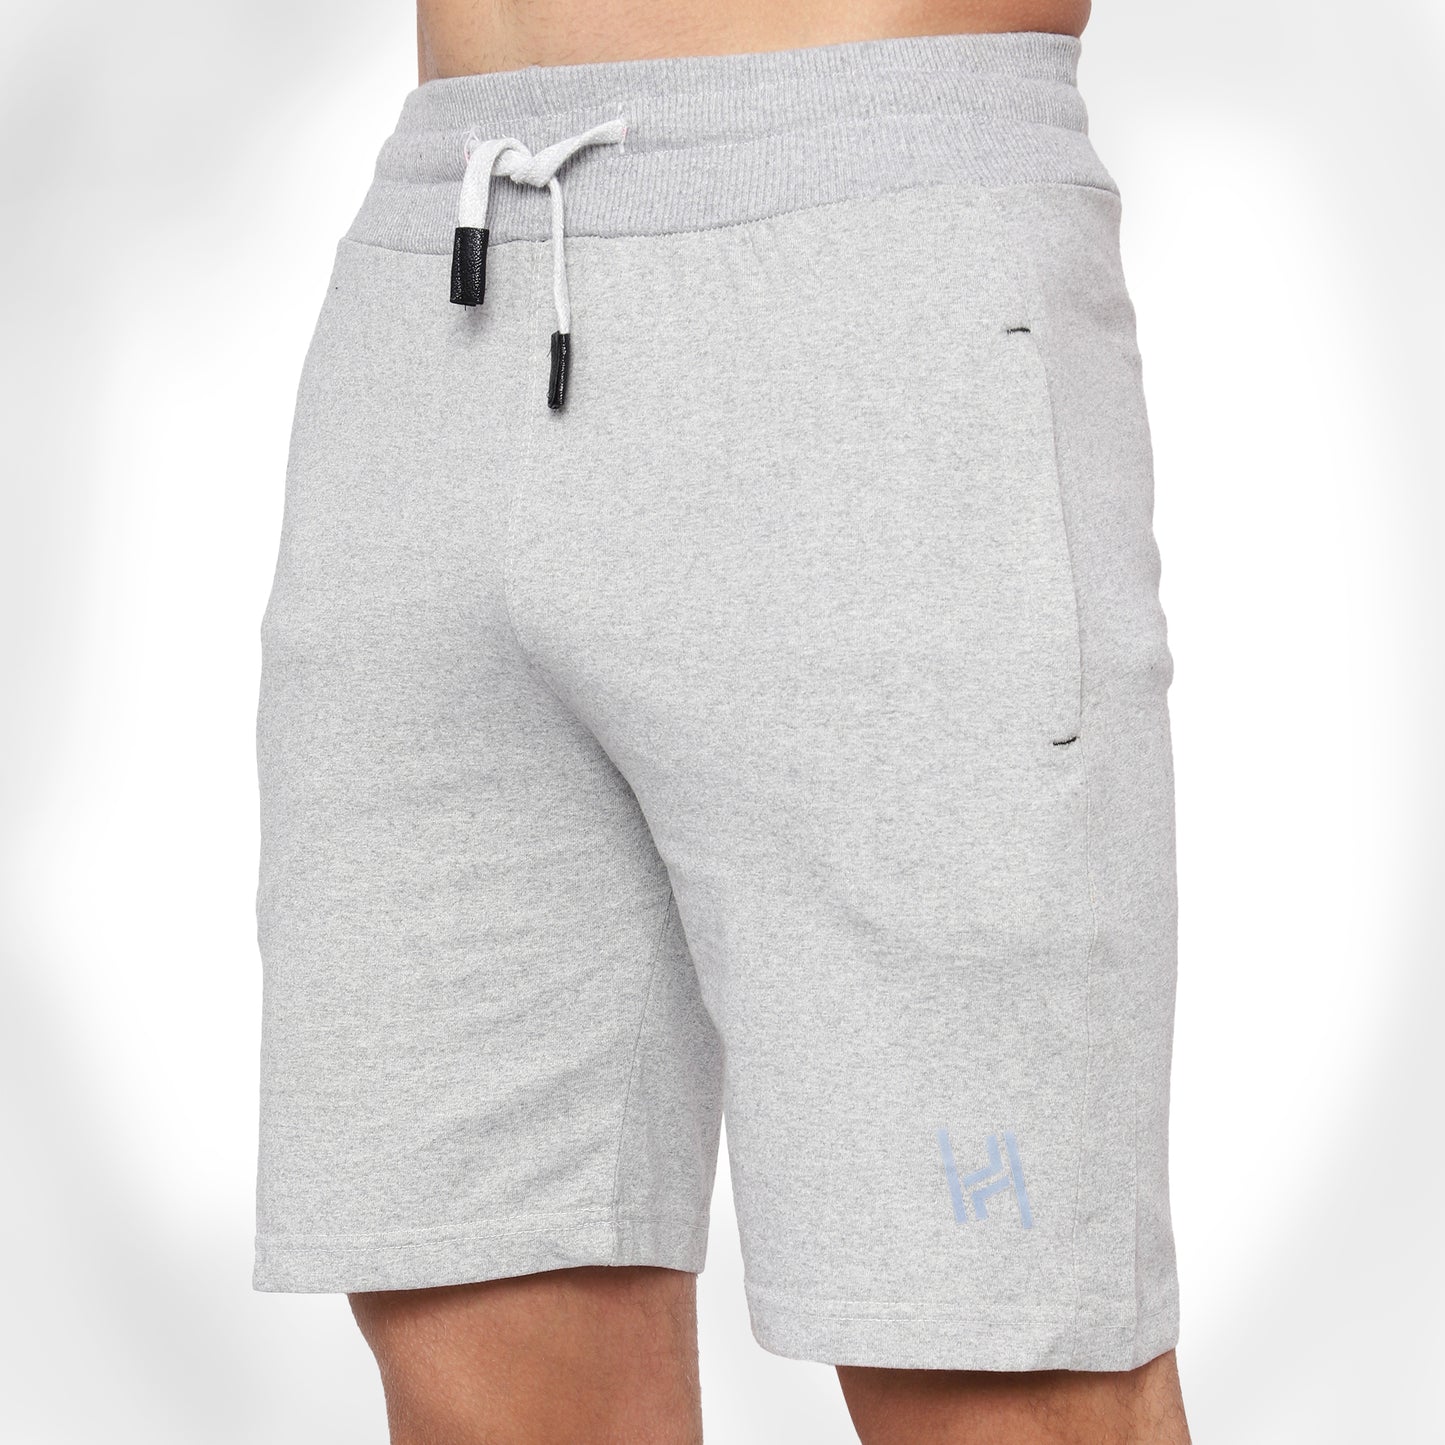 HealthHike NeoFlex Men's Regular Fit Cotton Shorts with Zipper Pocket - Comfortable Rich Solid Design Men's Shorts